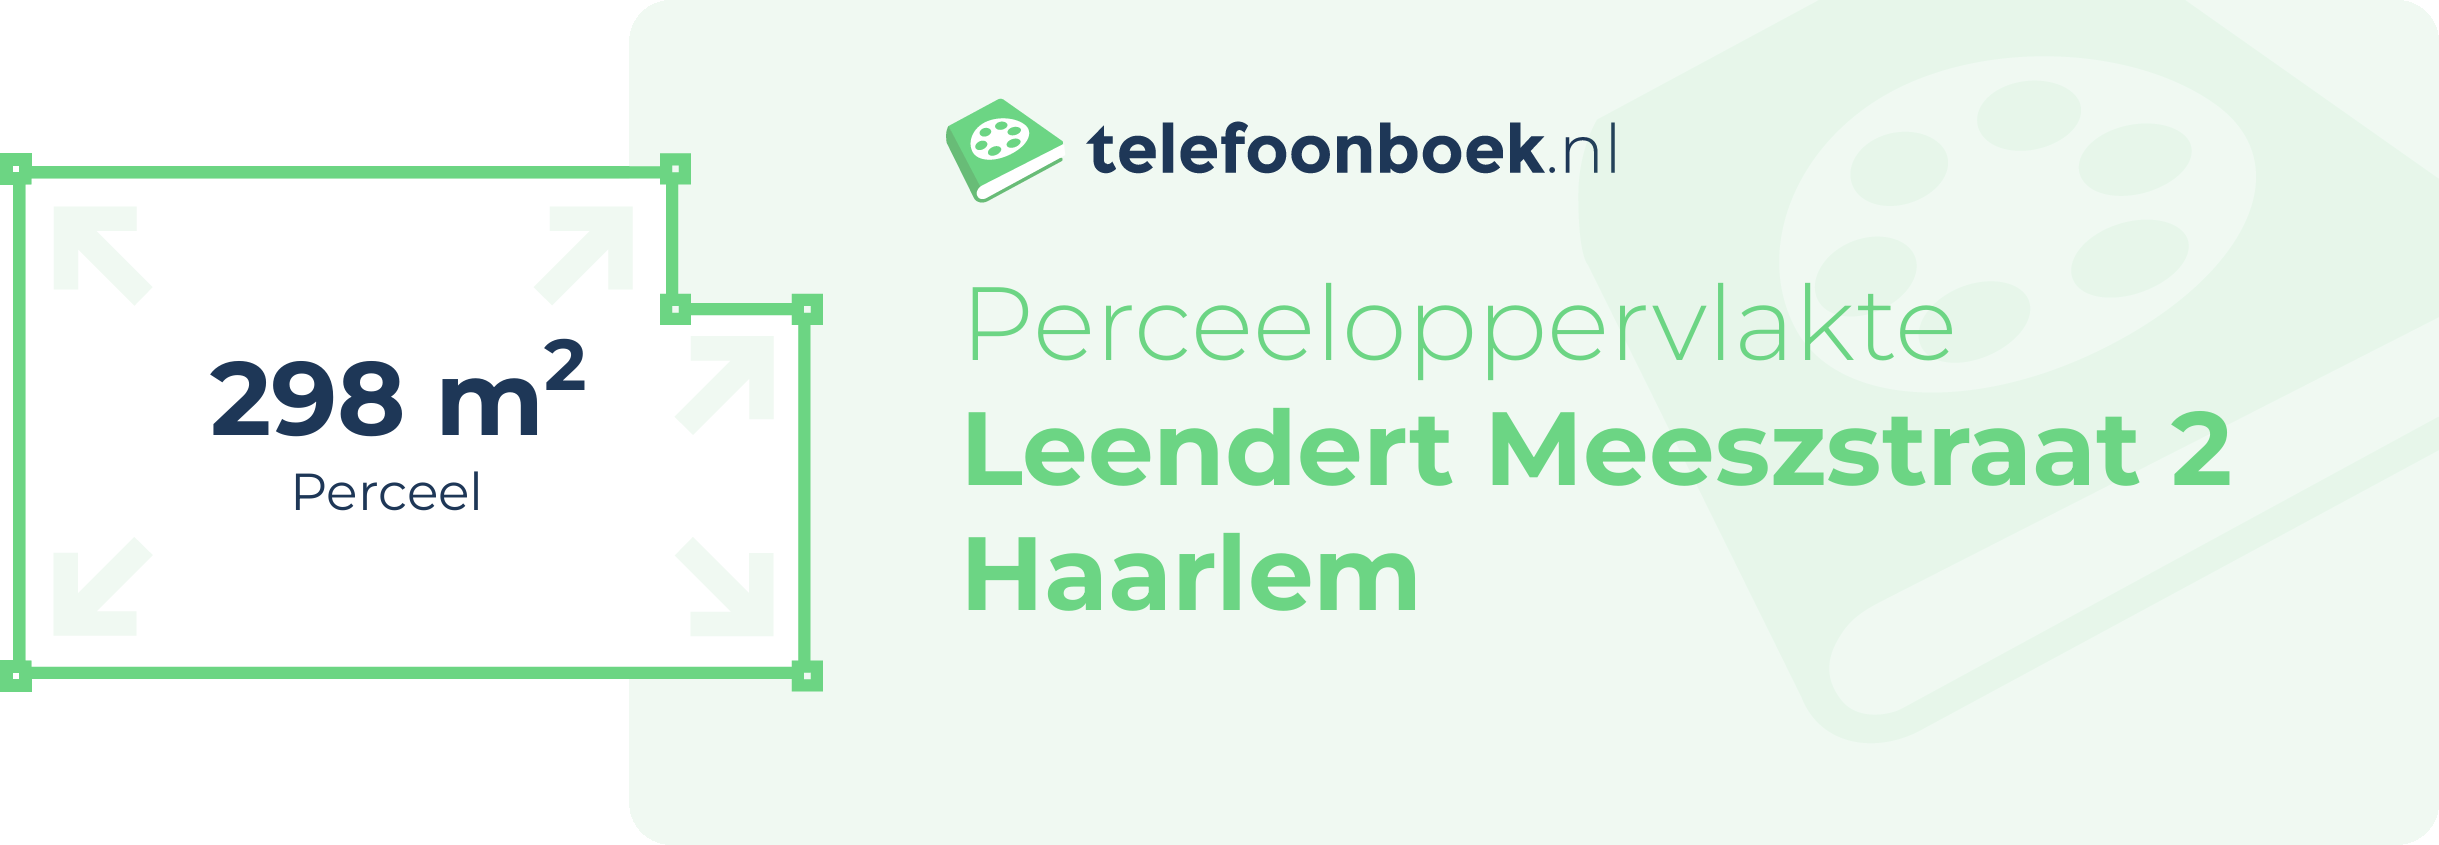 Perceeloppervlakte Leendert Meeszstraat 2 Haarlem